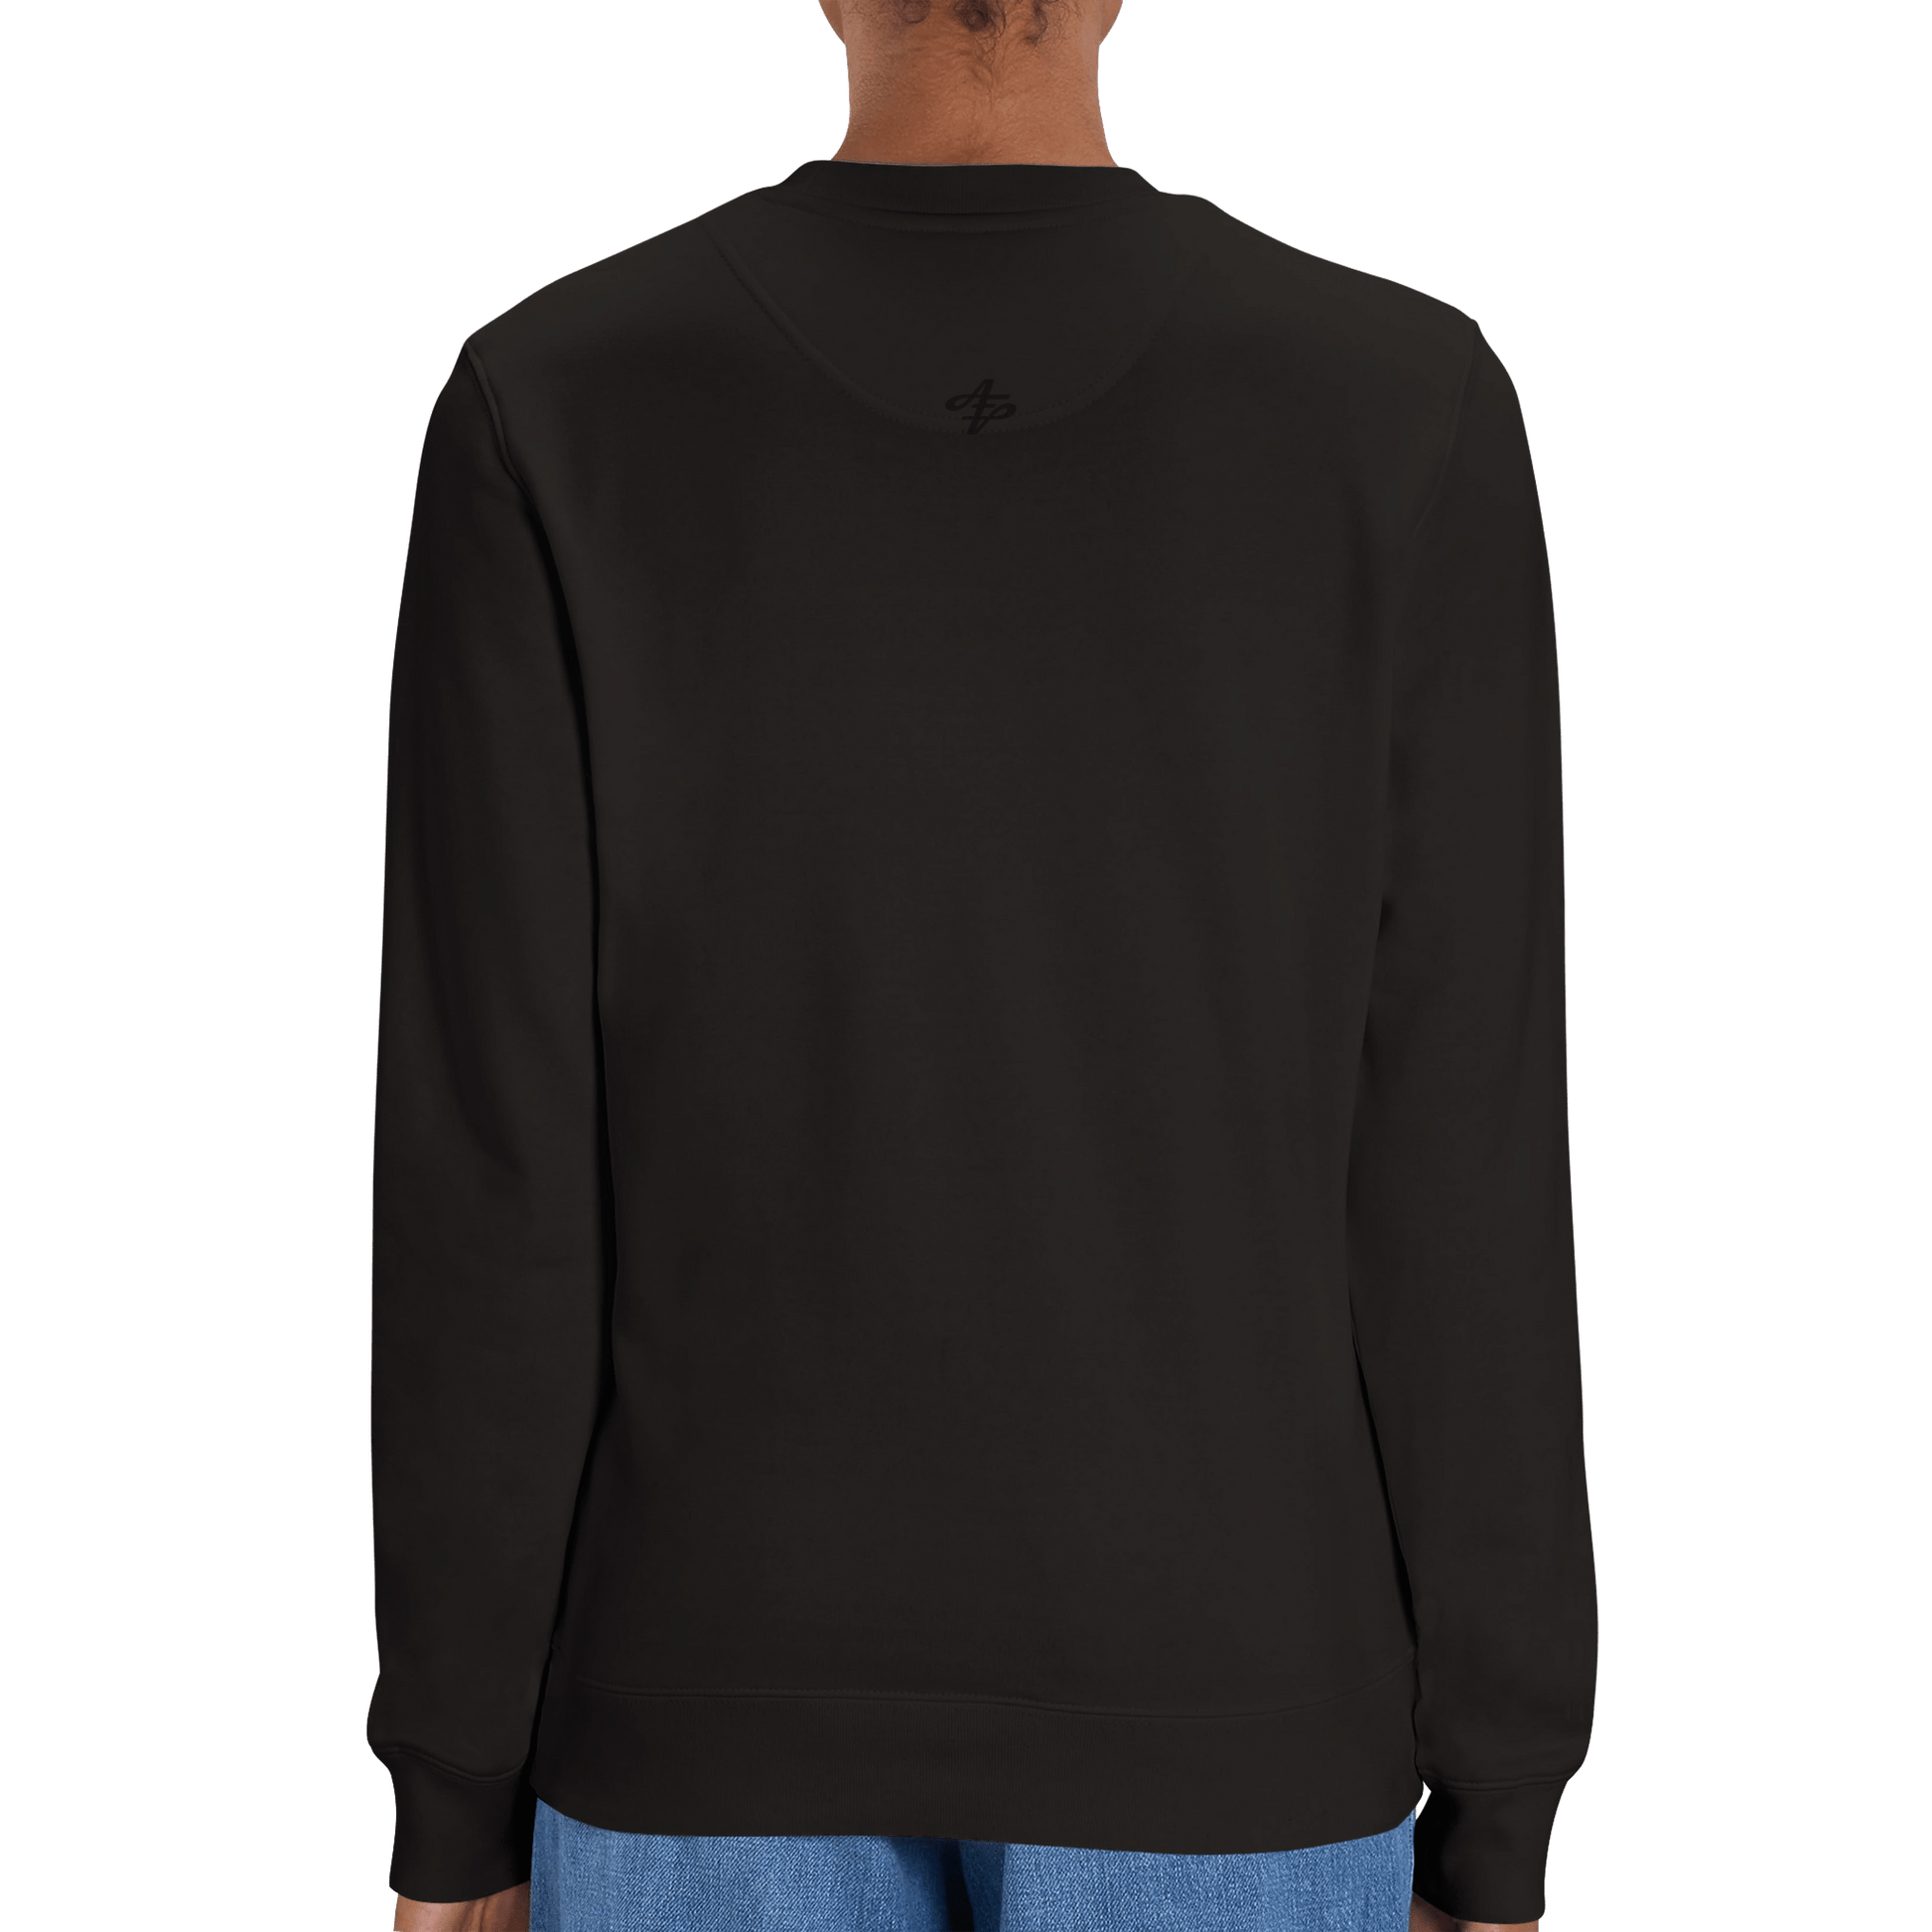 The Love - Organic Unisex Crewneck Sweatshirt apparel